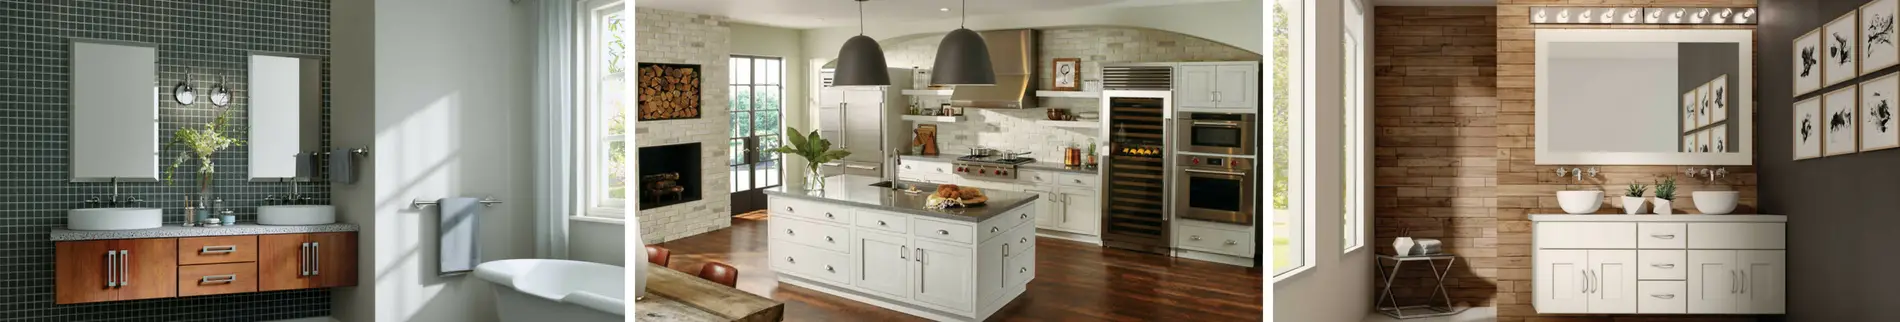 starmark cabinets in kitchens room scenes